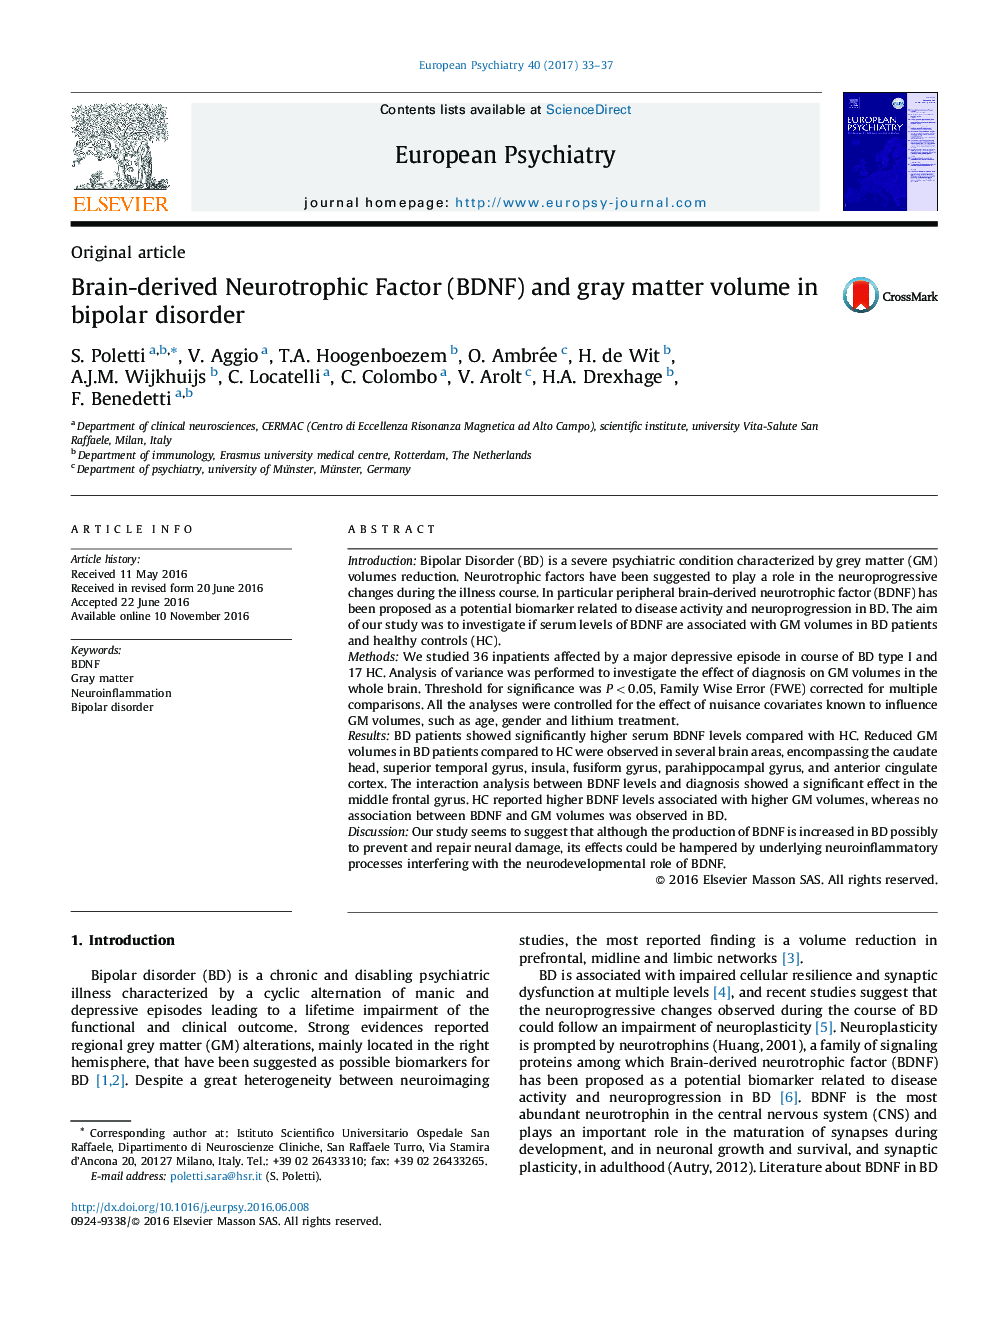 Original articleBrain-derived Neurotrophic Factor (BDNF) and gray matter volume in bipolar disorder